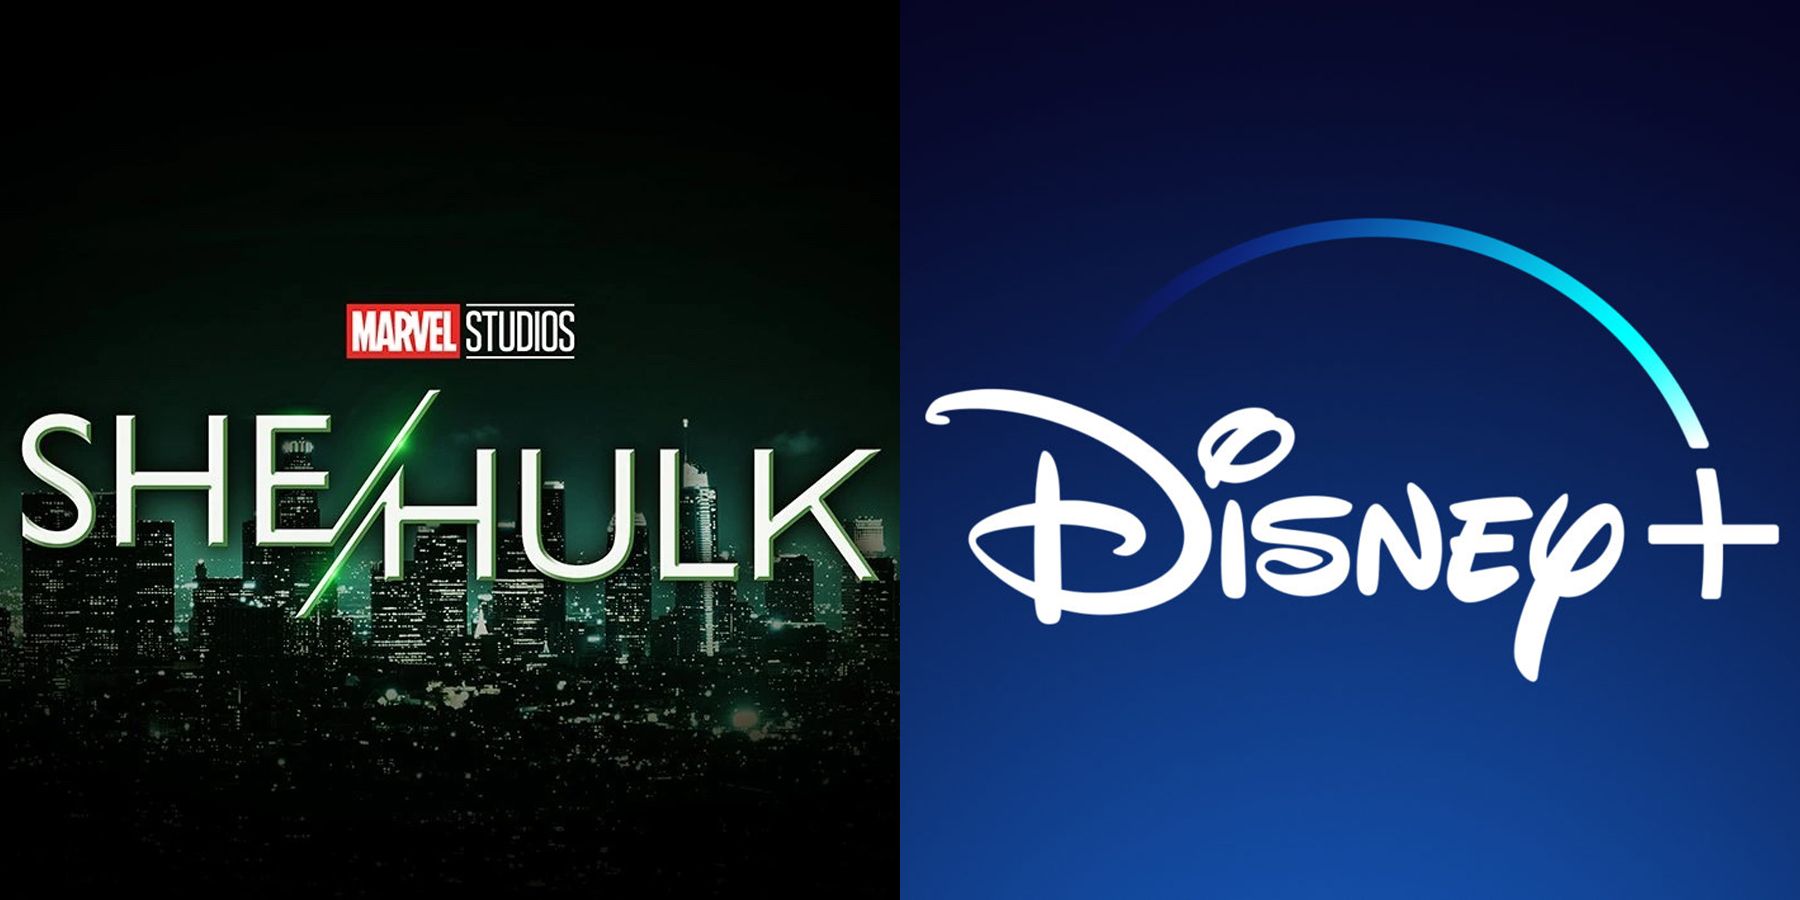 She-Hulk Disney Plus Release Date